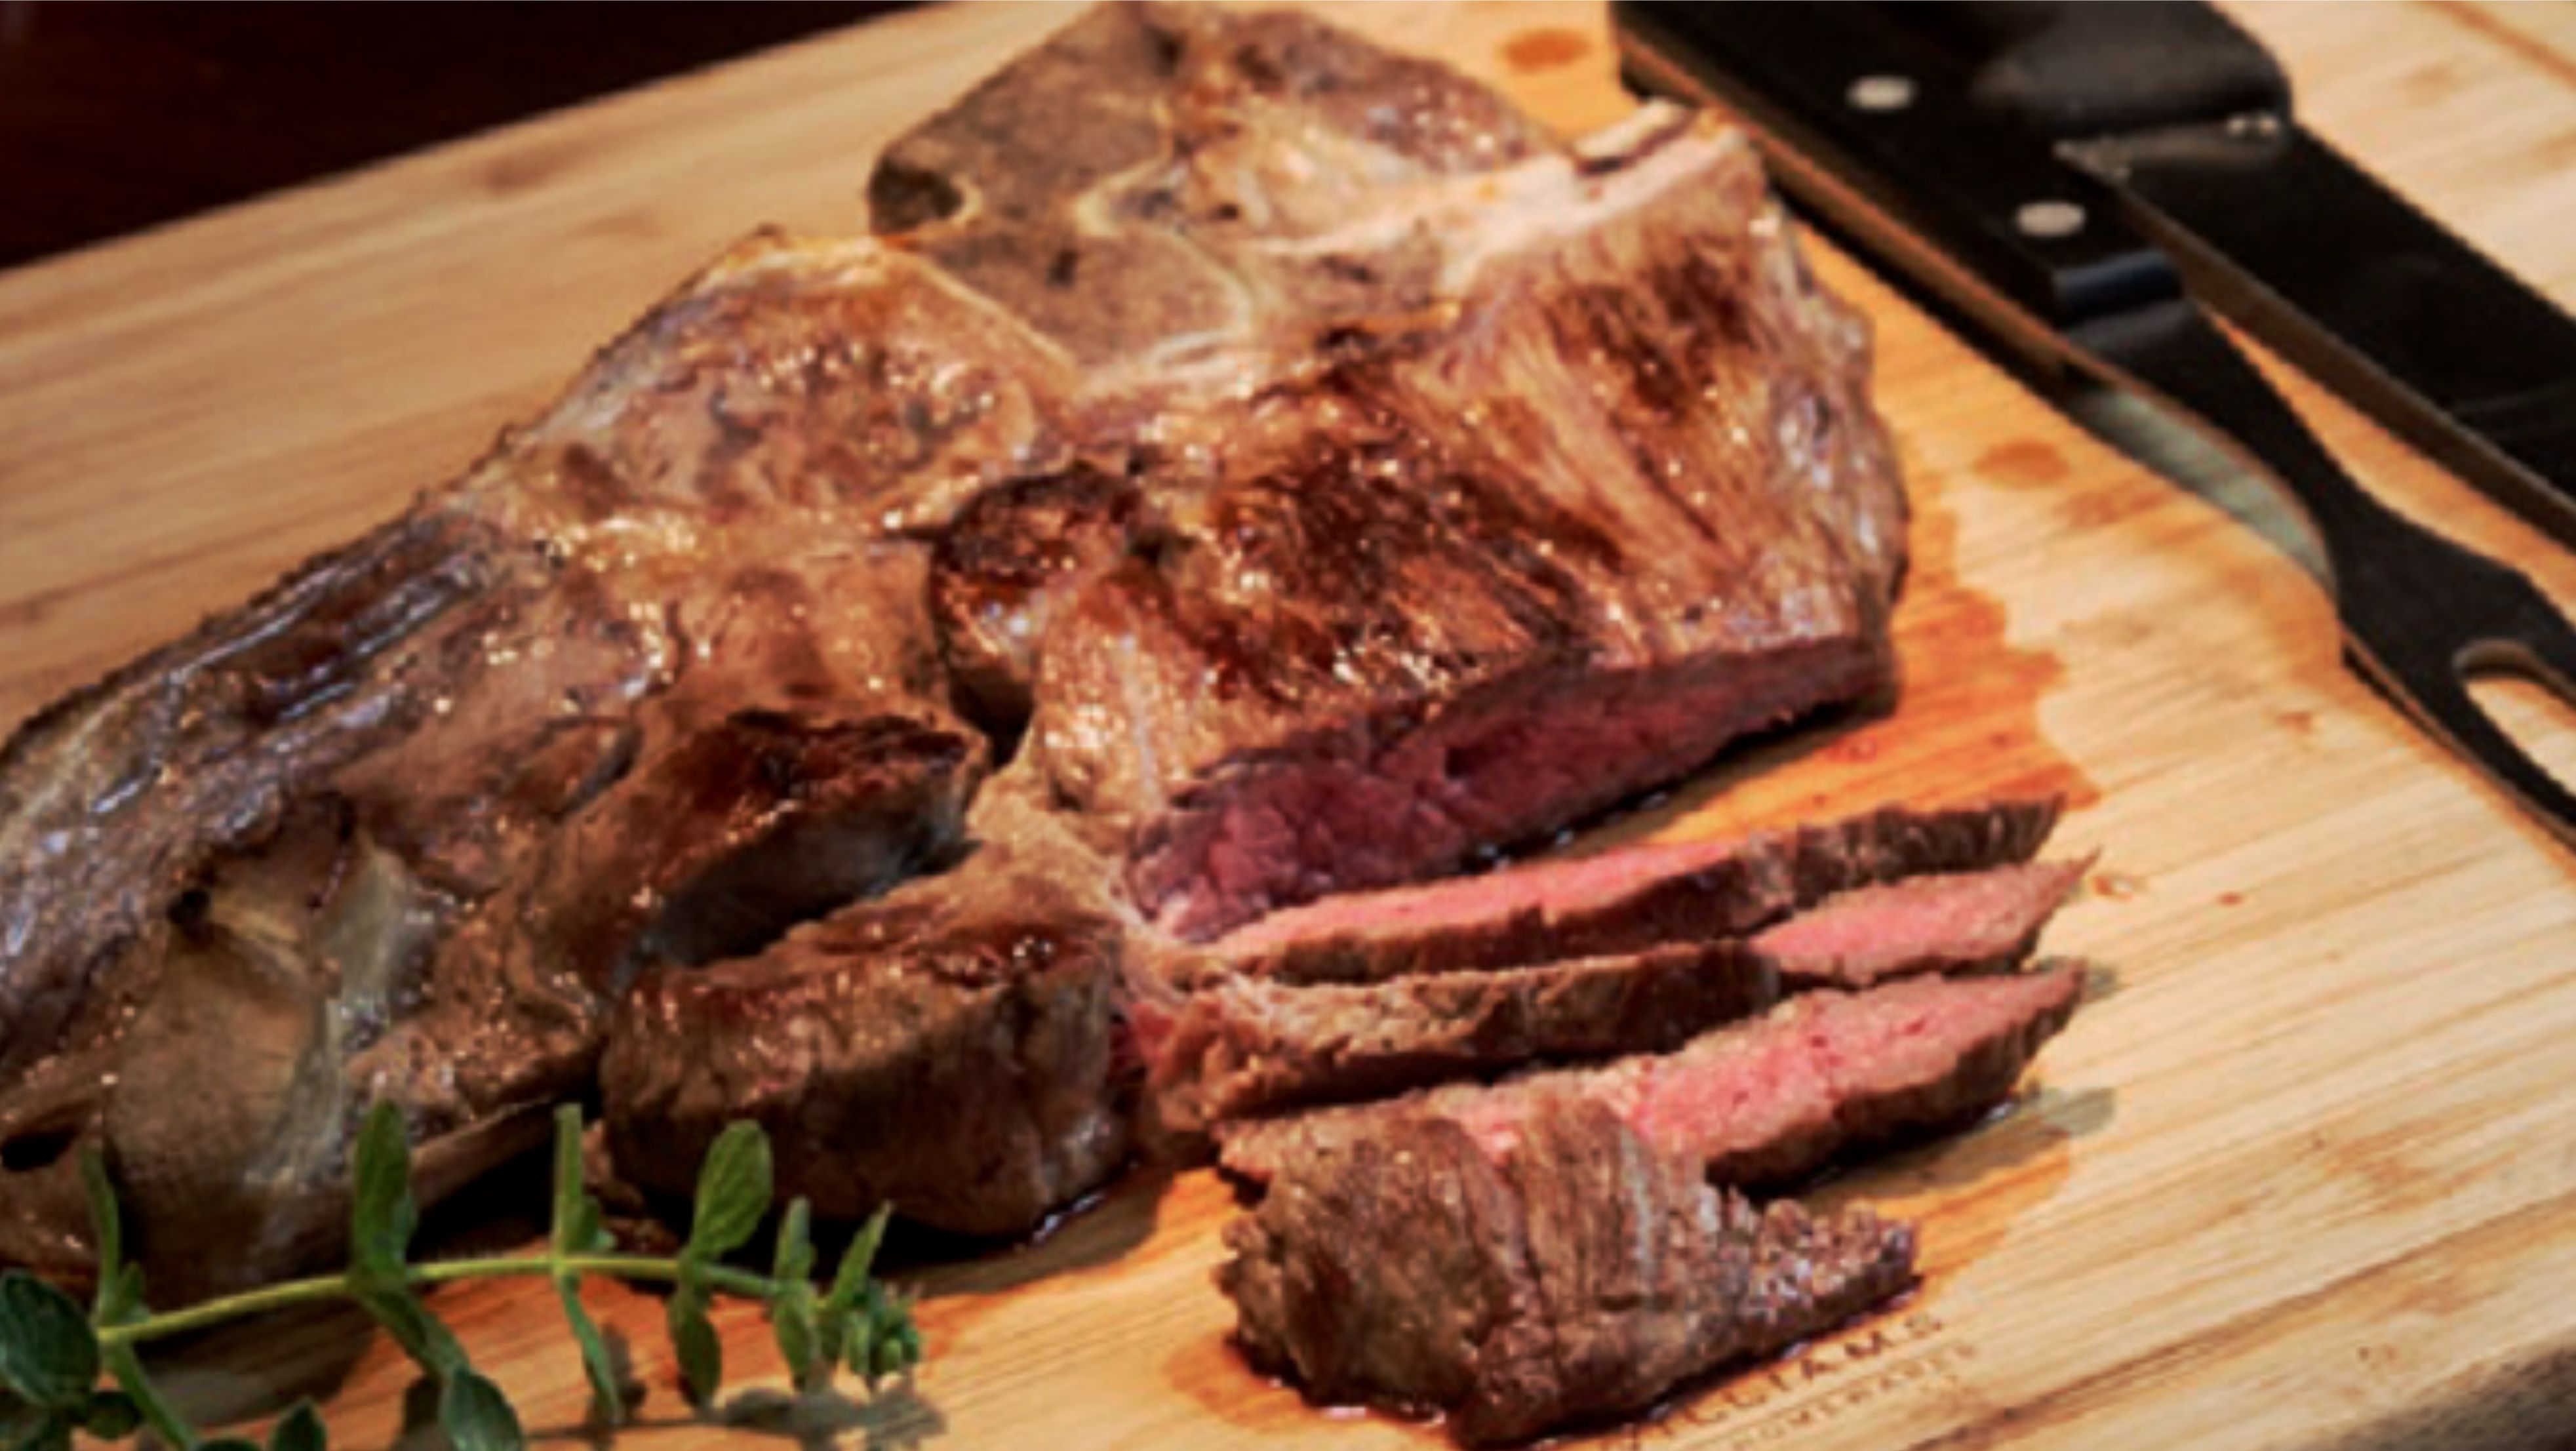 Chuck-eye steak from heifer calf